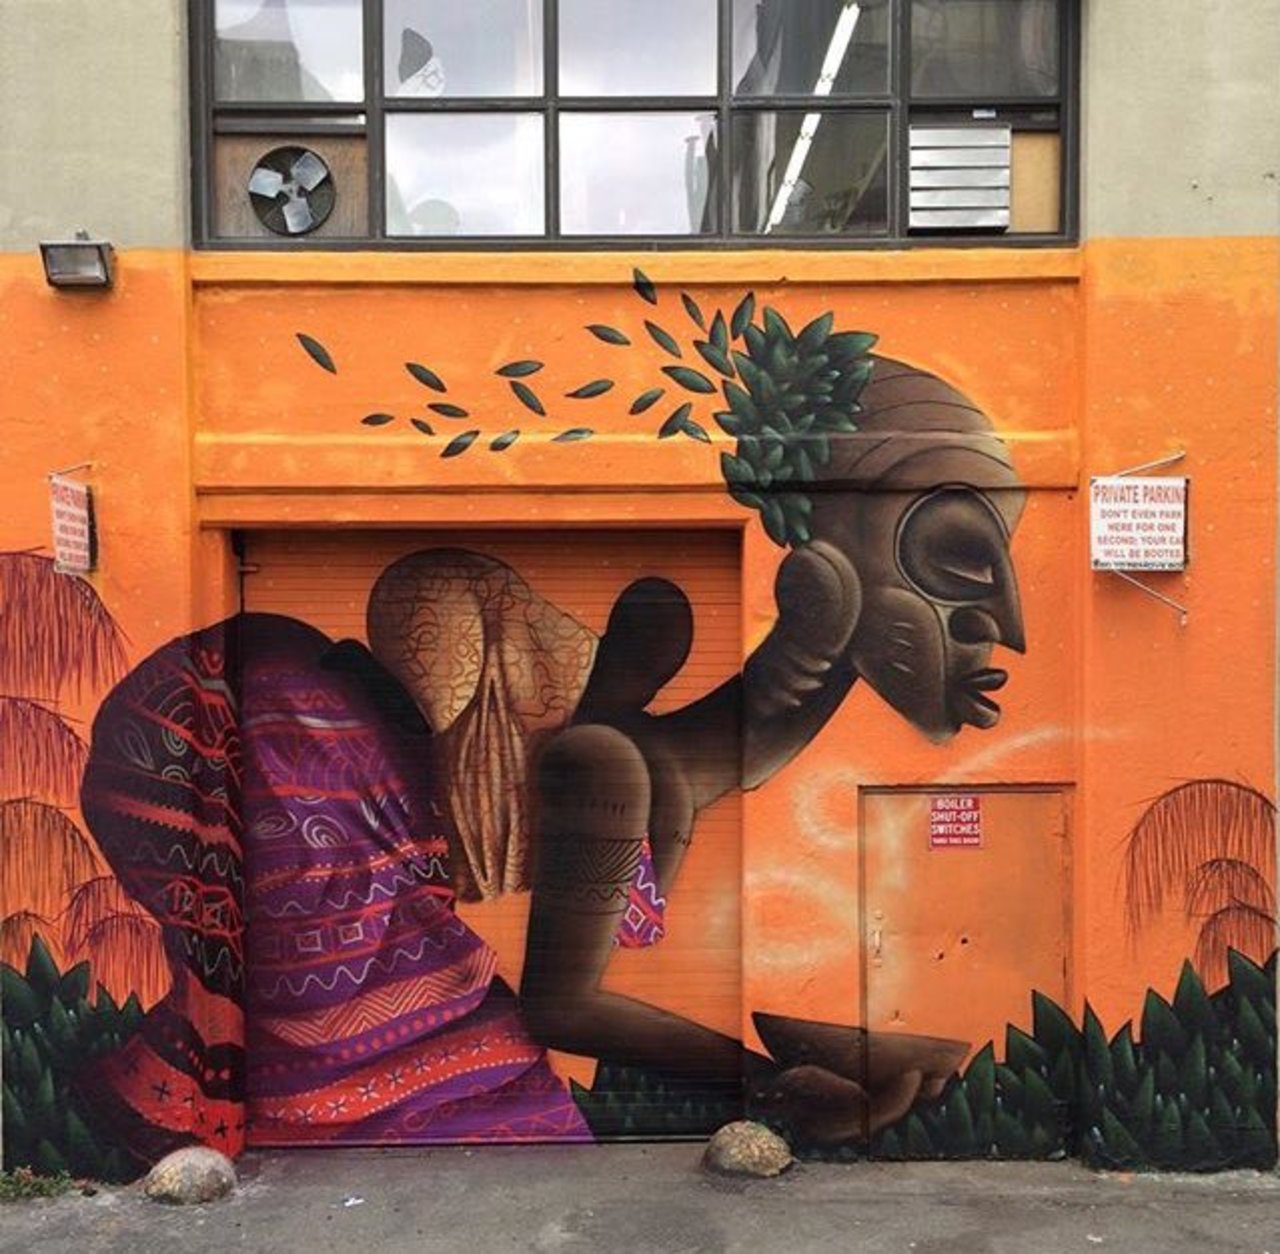 New Street Art by Alexandre Keto in NYC 

#art #graffiti #mural #streetart https://t.co/QhPPug0ixD